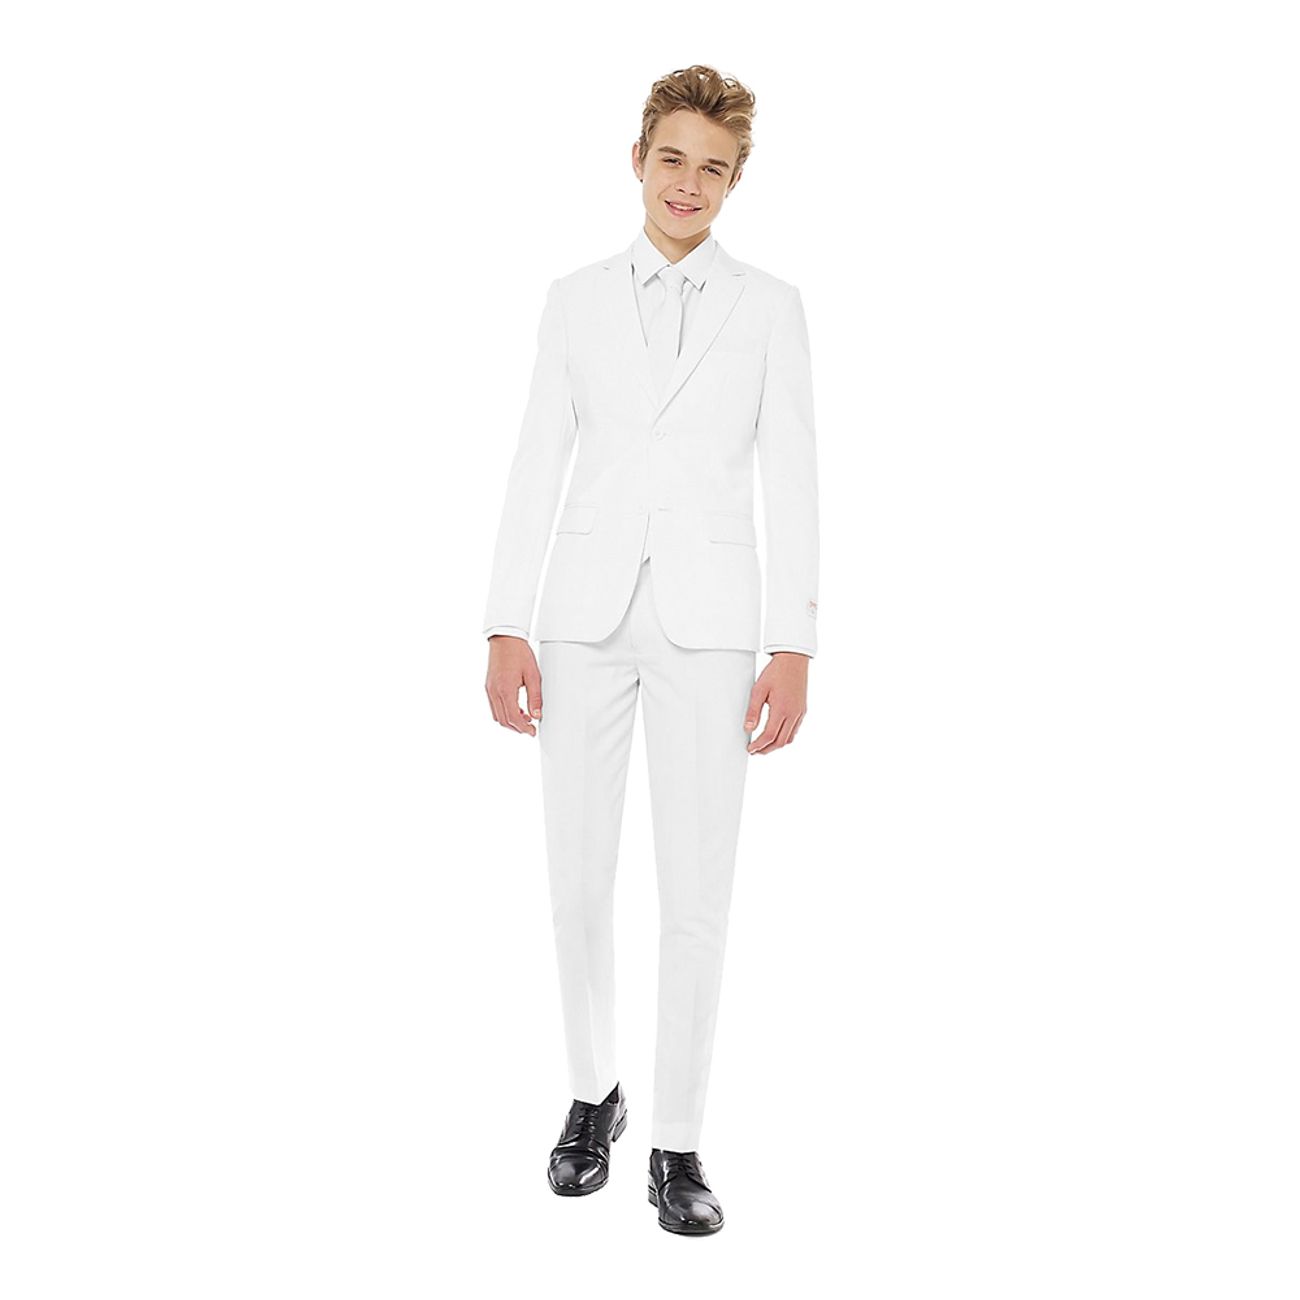 opposuits-teen-white-knight-kostym-79473-1